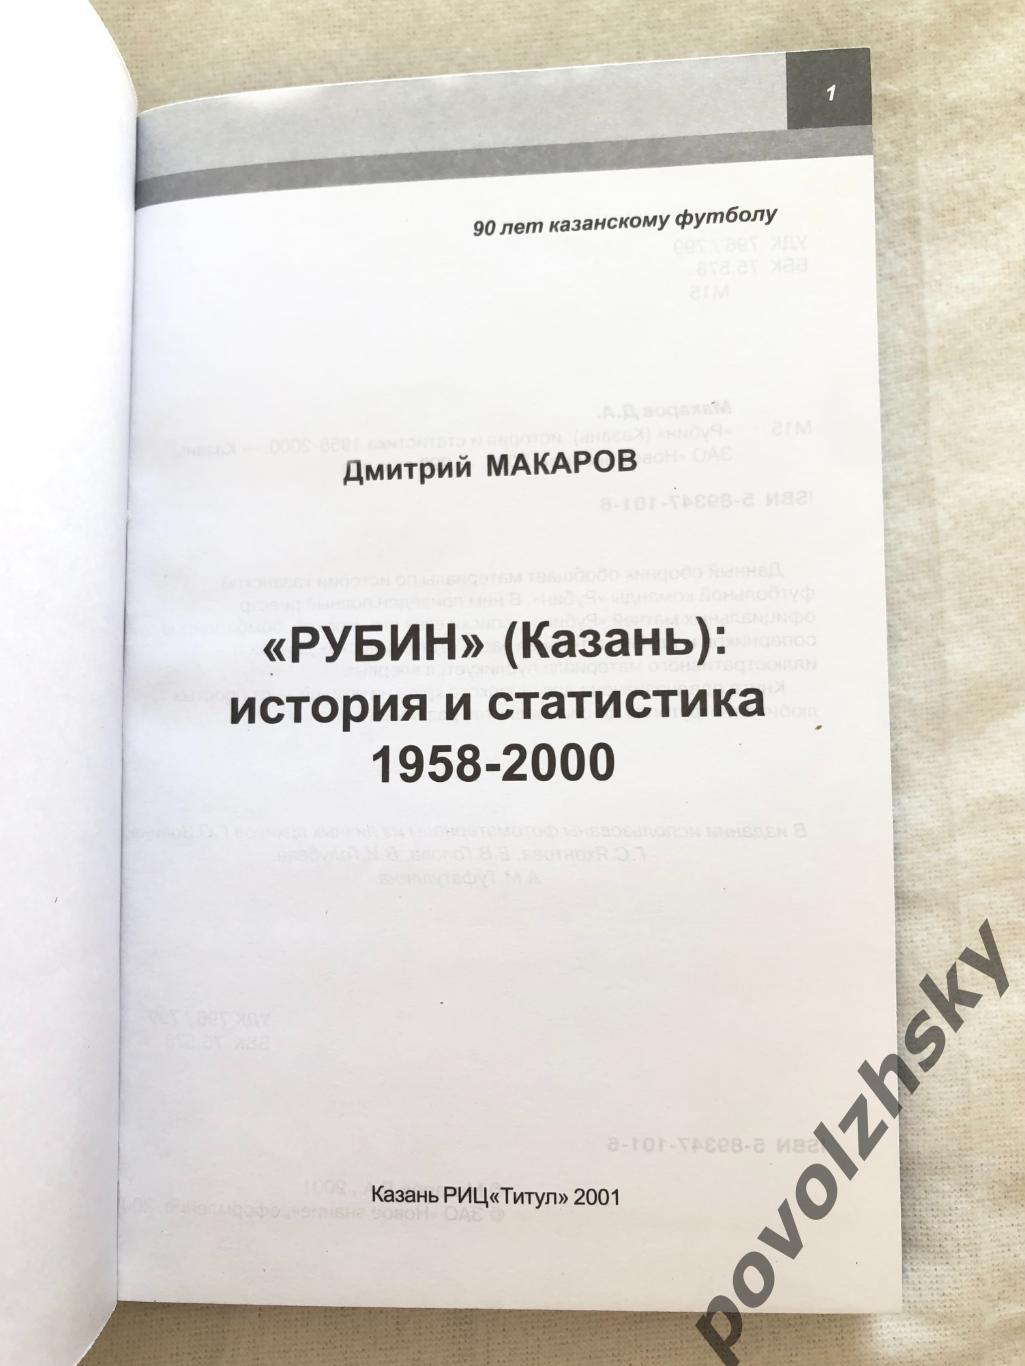 Дмитрий Макаров — Рубин Казань: история и статистика 1958-2000 2